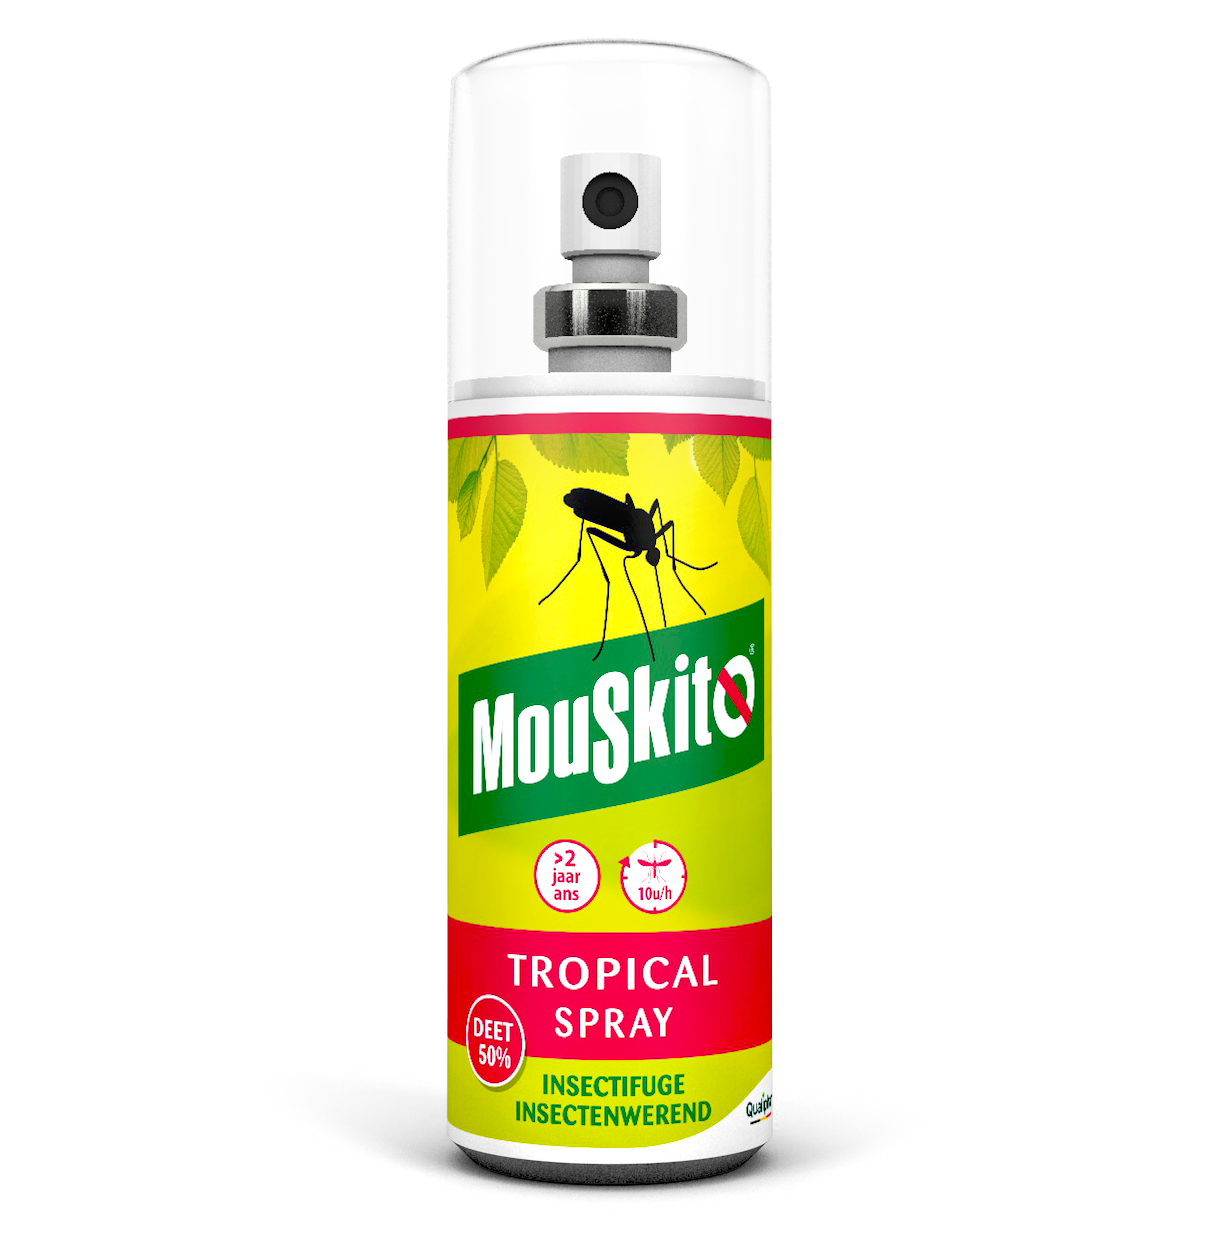 Mouskito® Tropical Spray